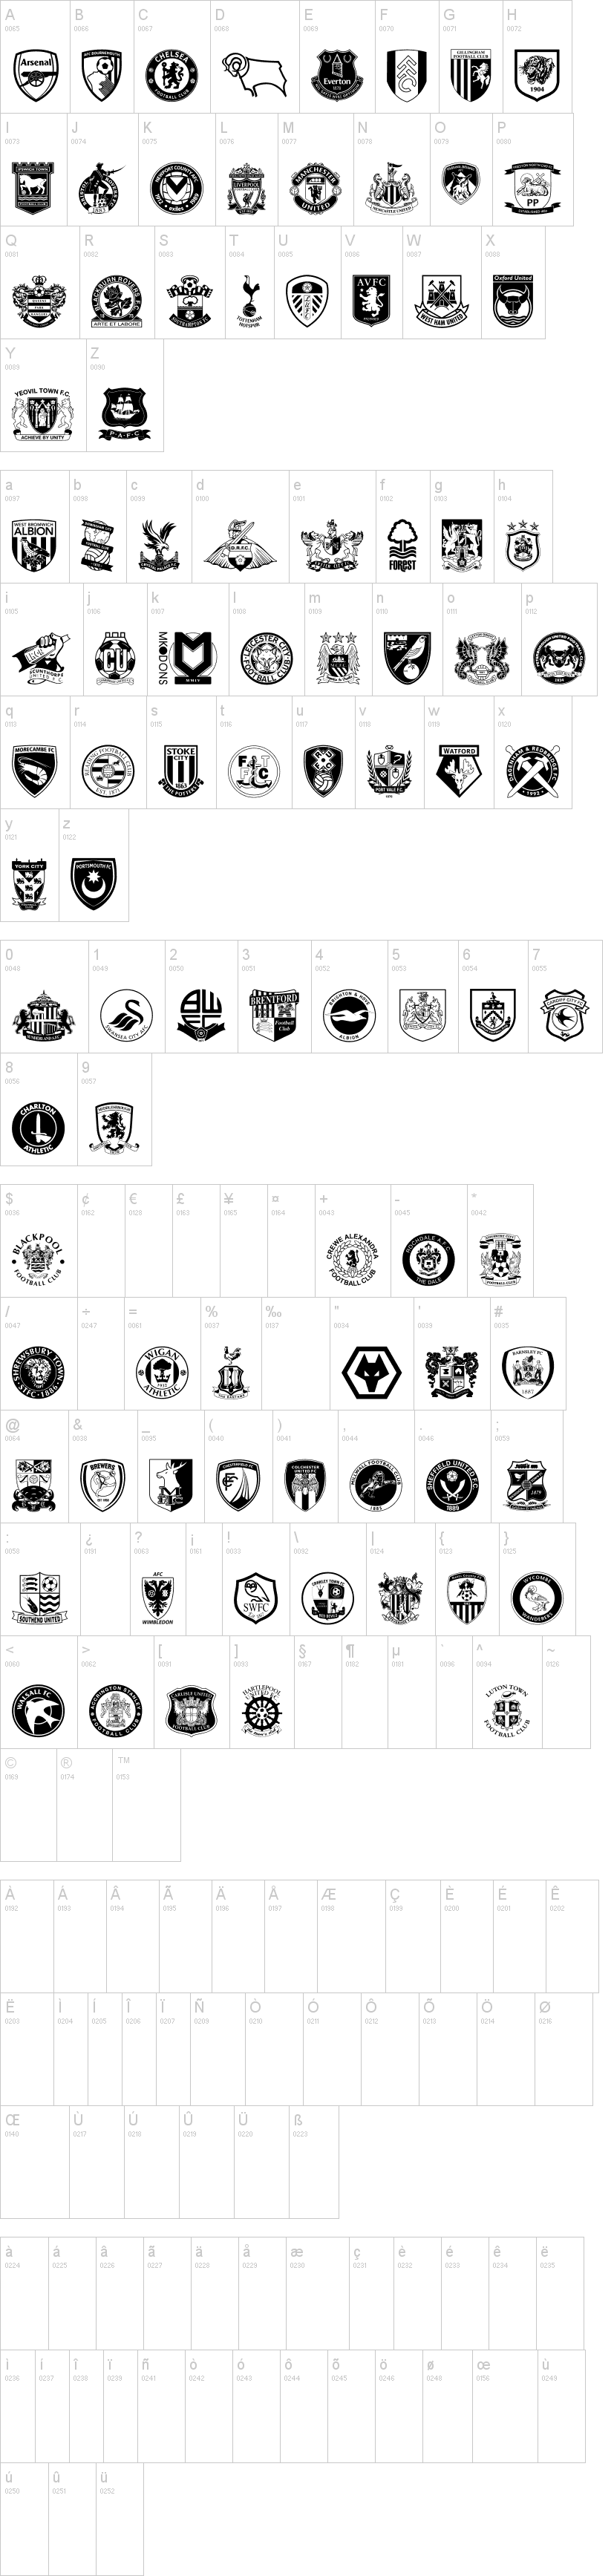 English Football Club Badges字符映射图